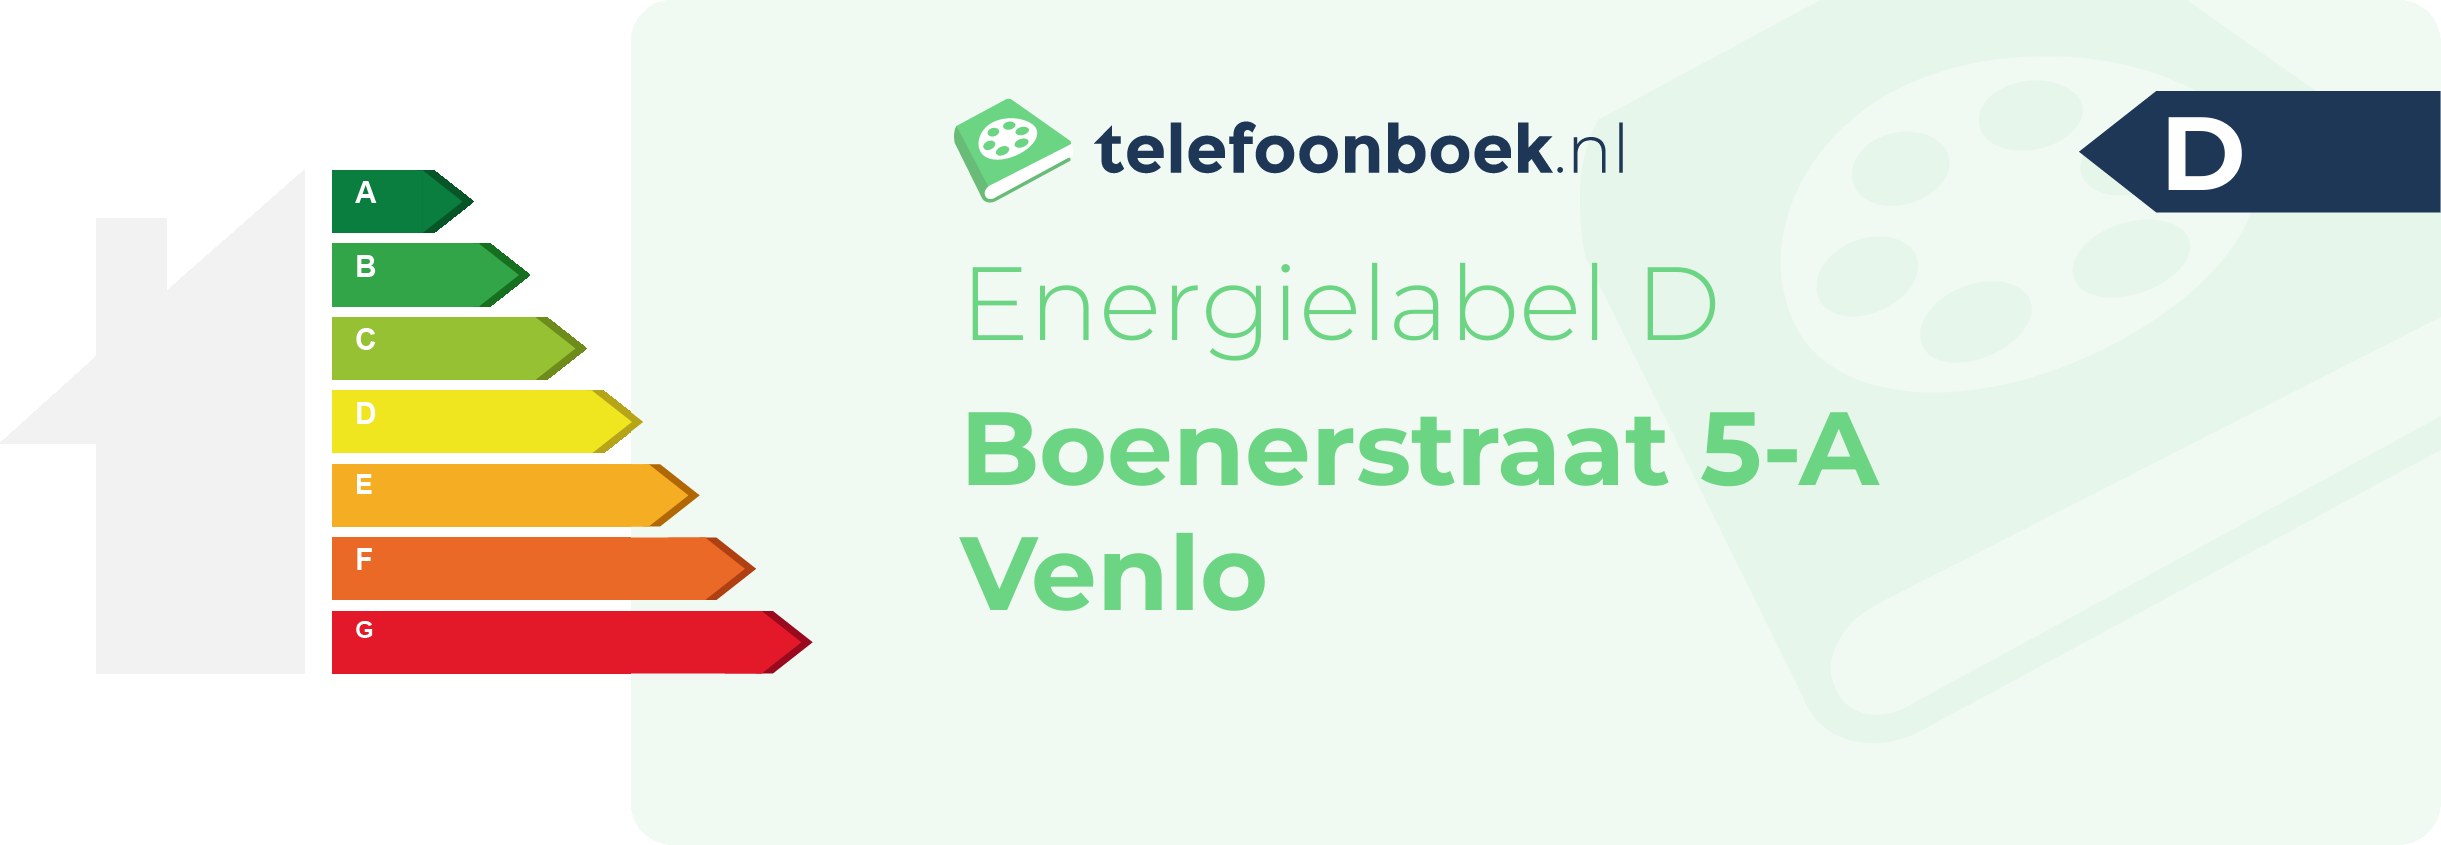 Energielabel Boenerstraat 5-A Venlo